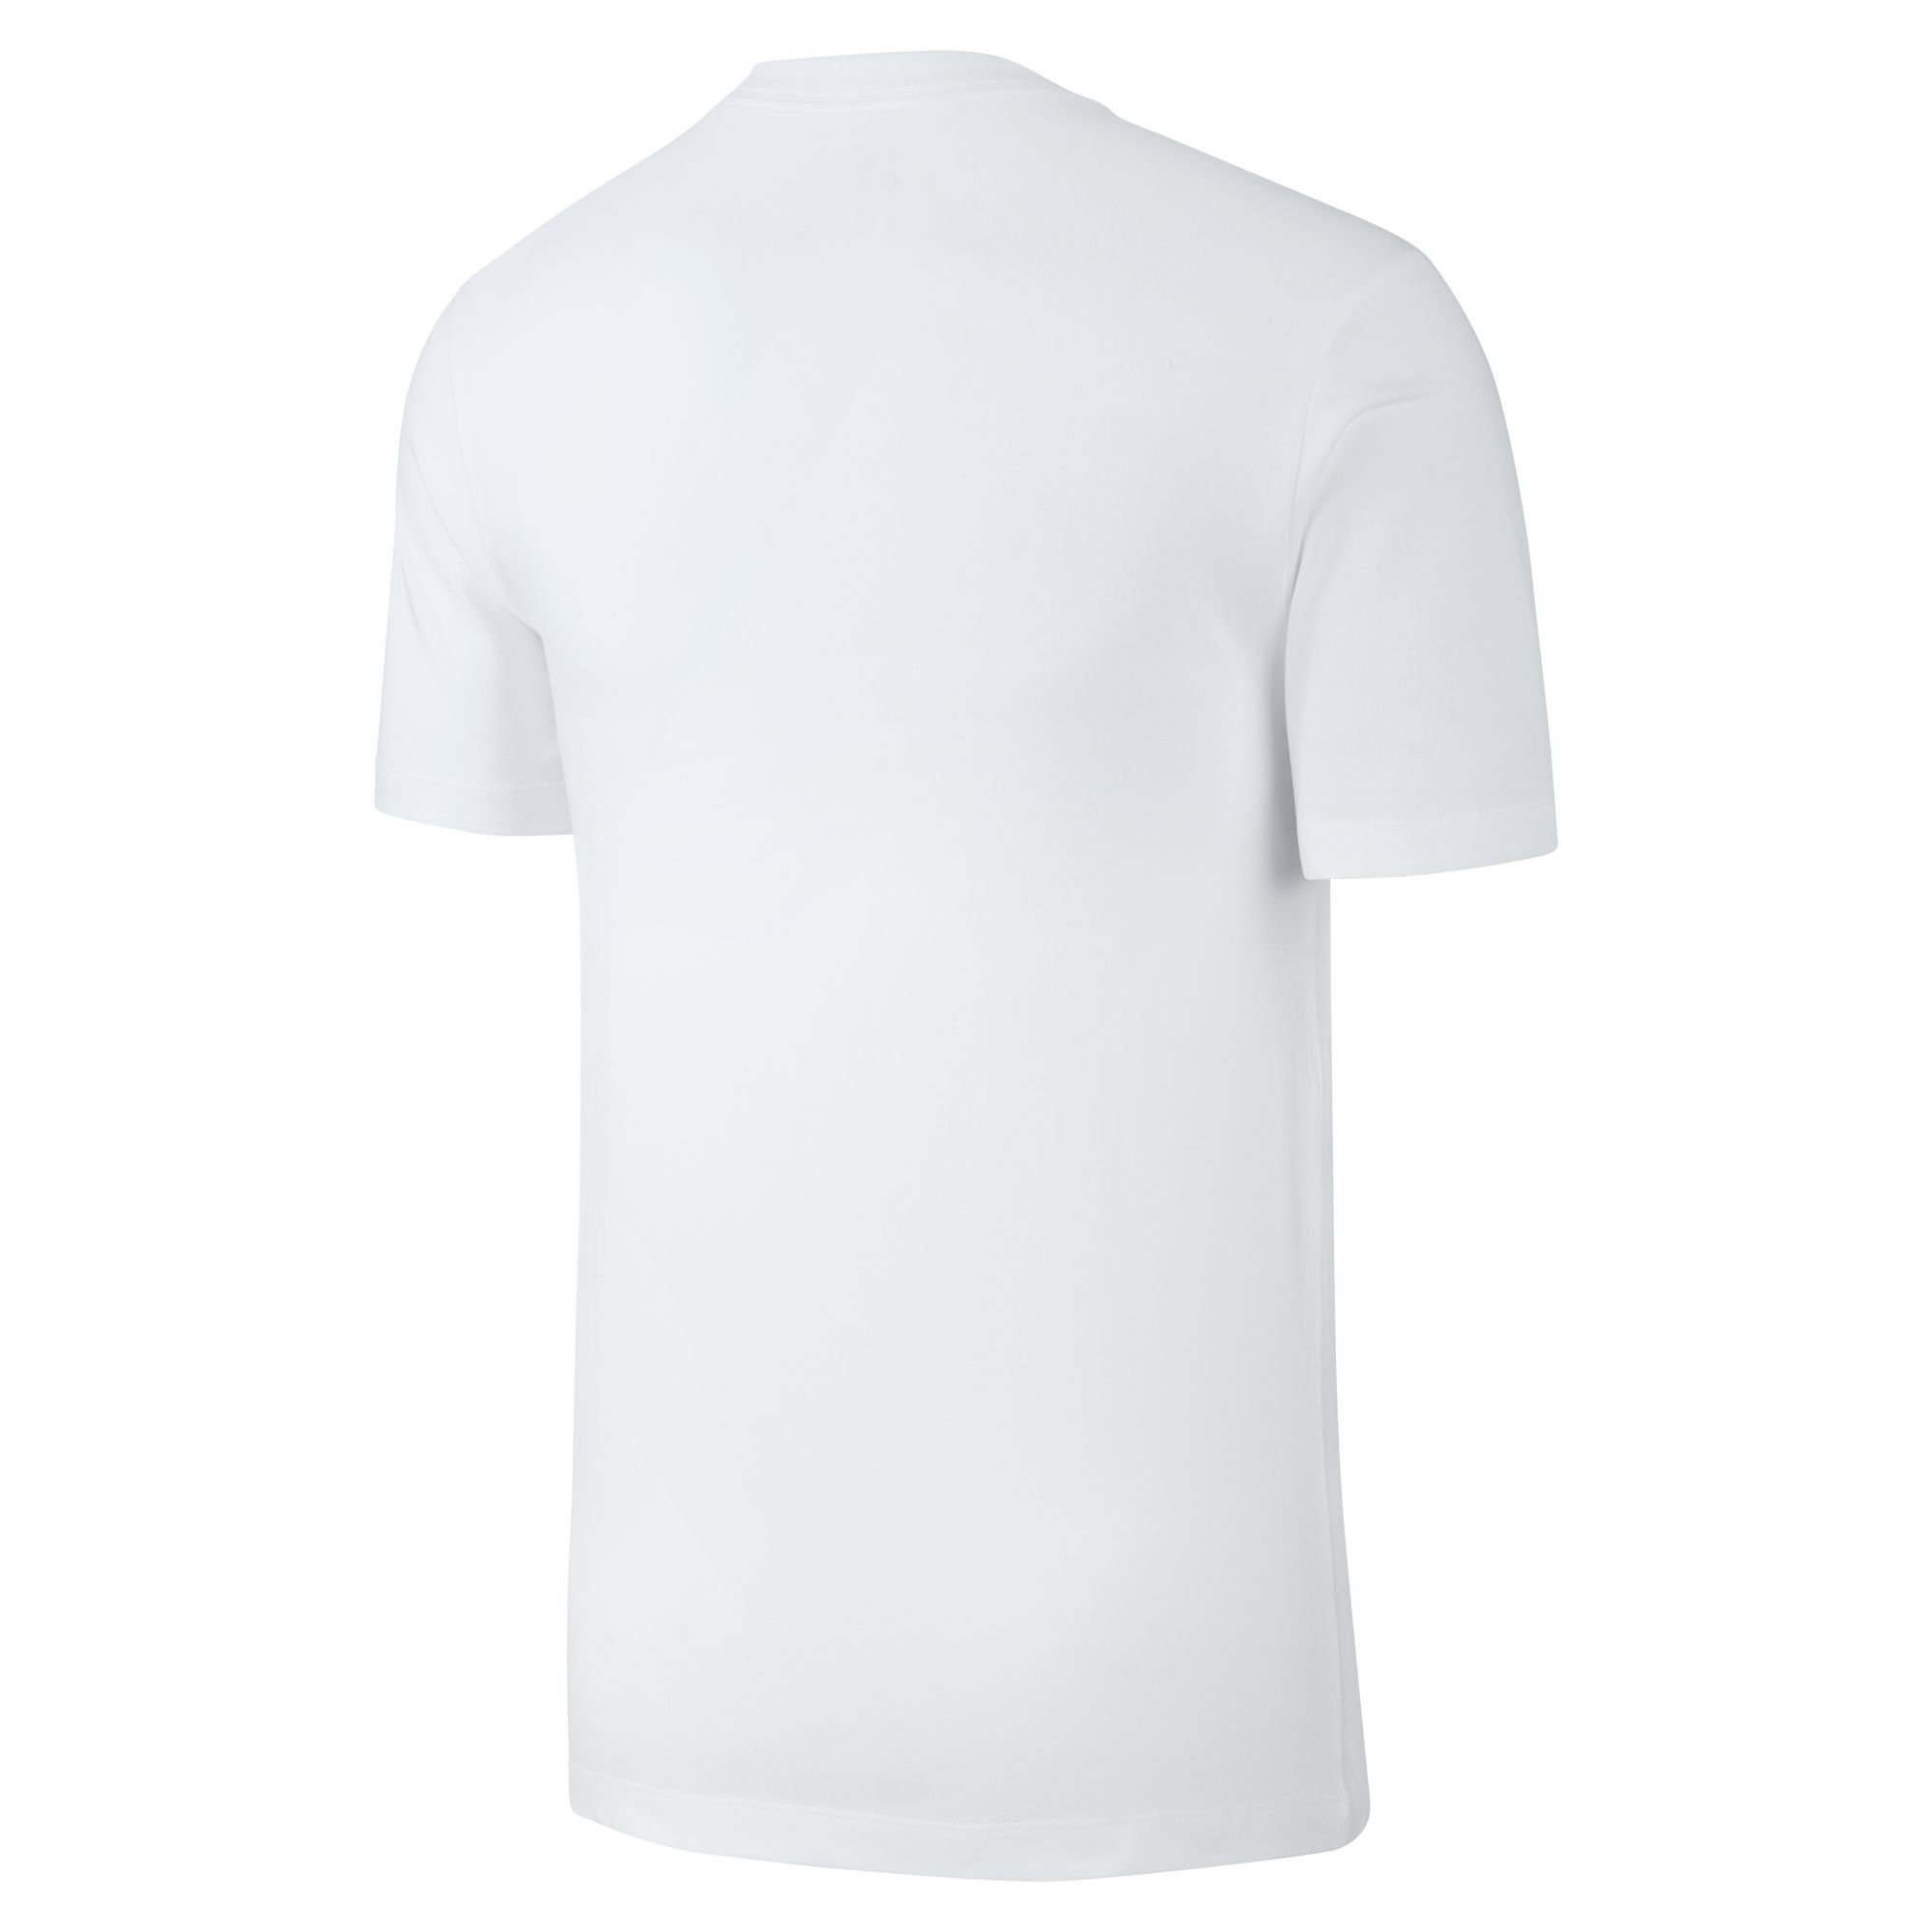 Black T-Shirt T-SHIRT Sportswear Nike JDI MEN'S White/